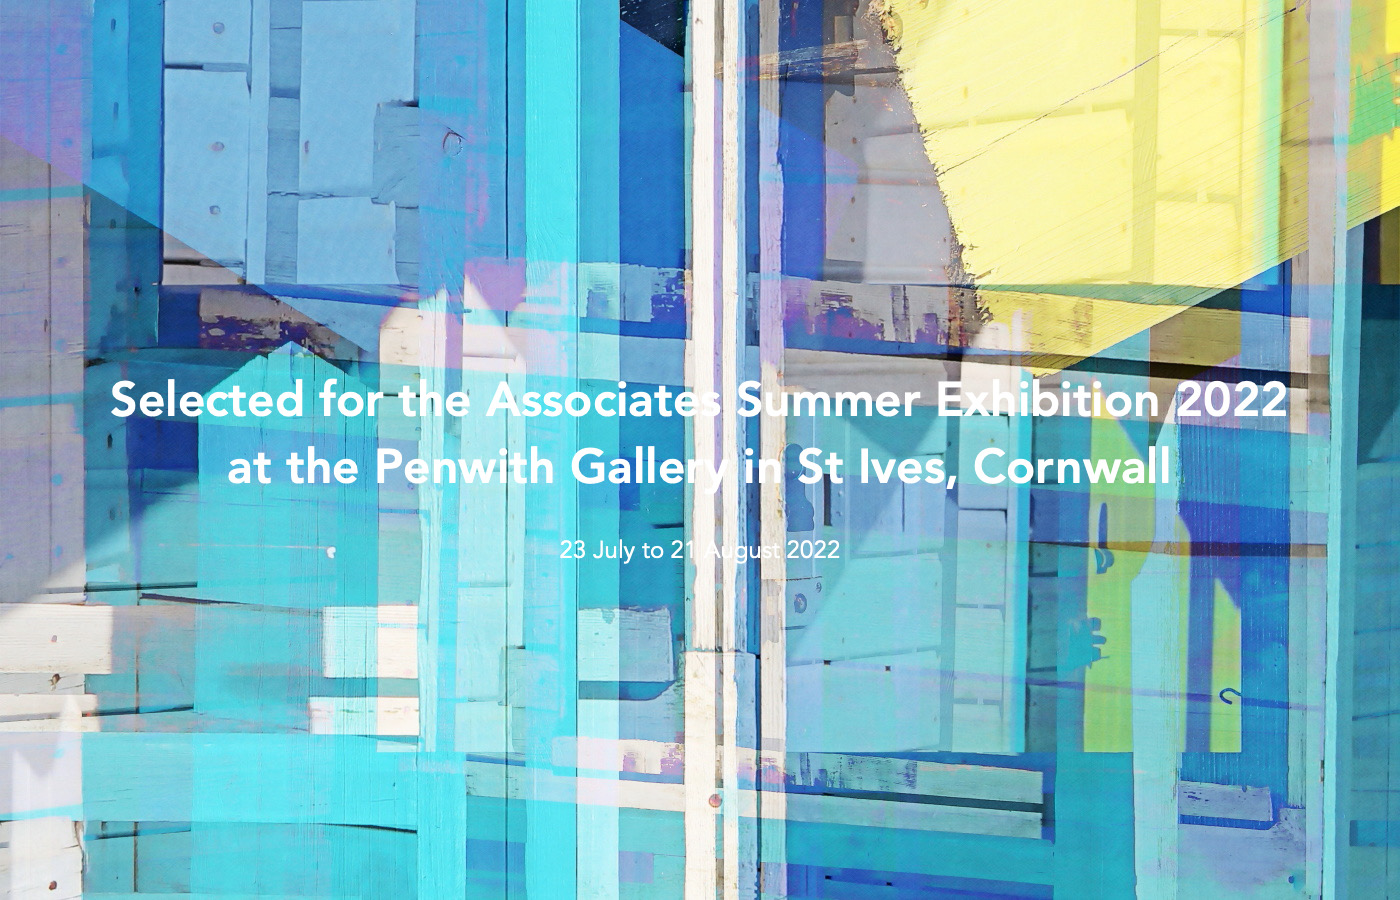 Penwith Gallery Associates Summer Exhibition 2022